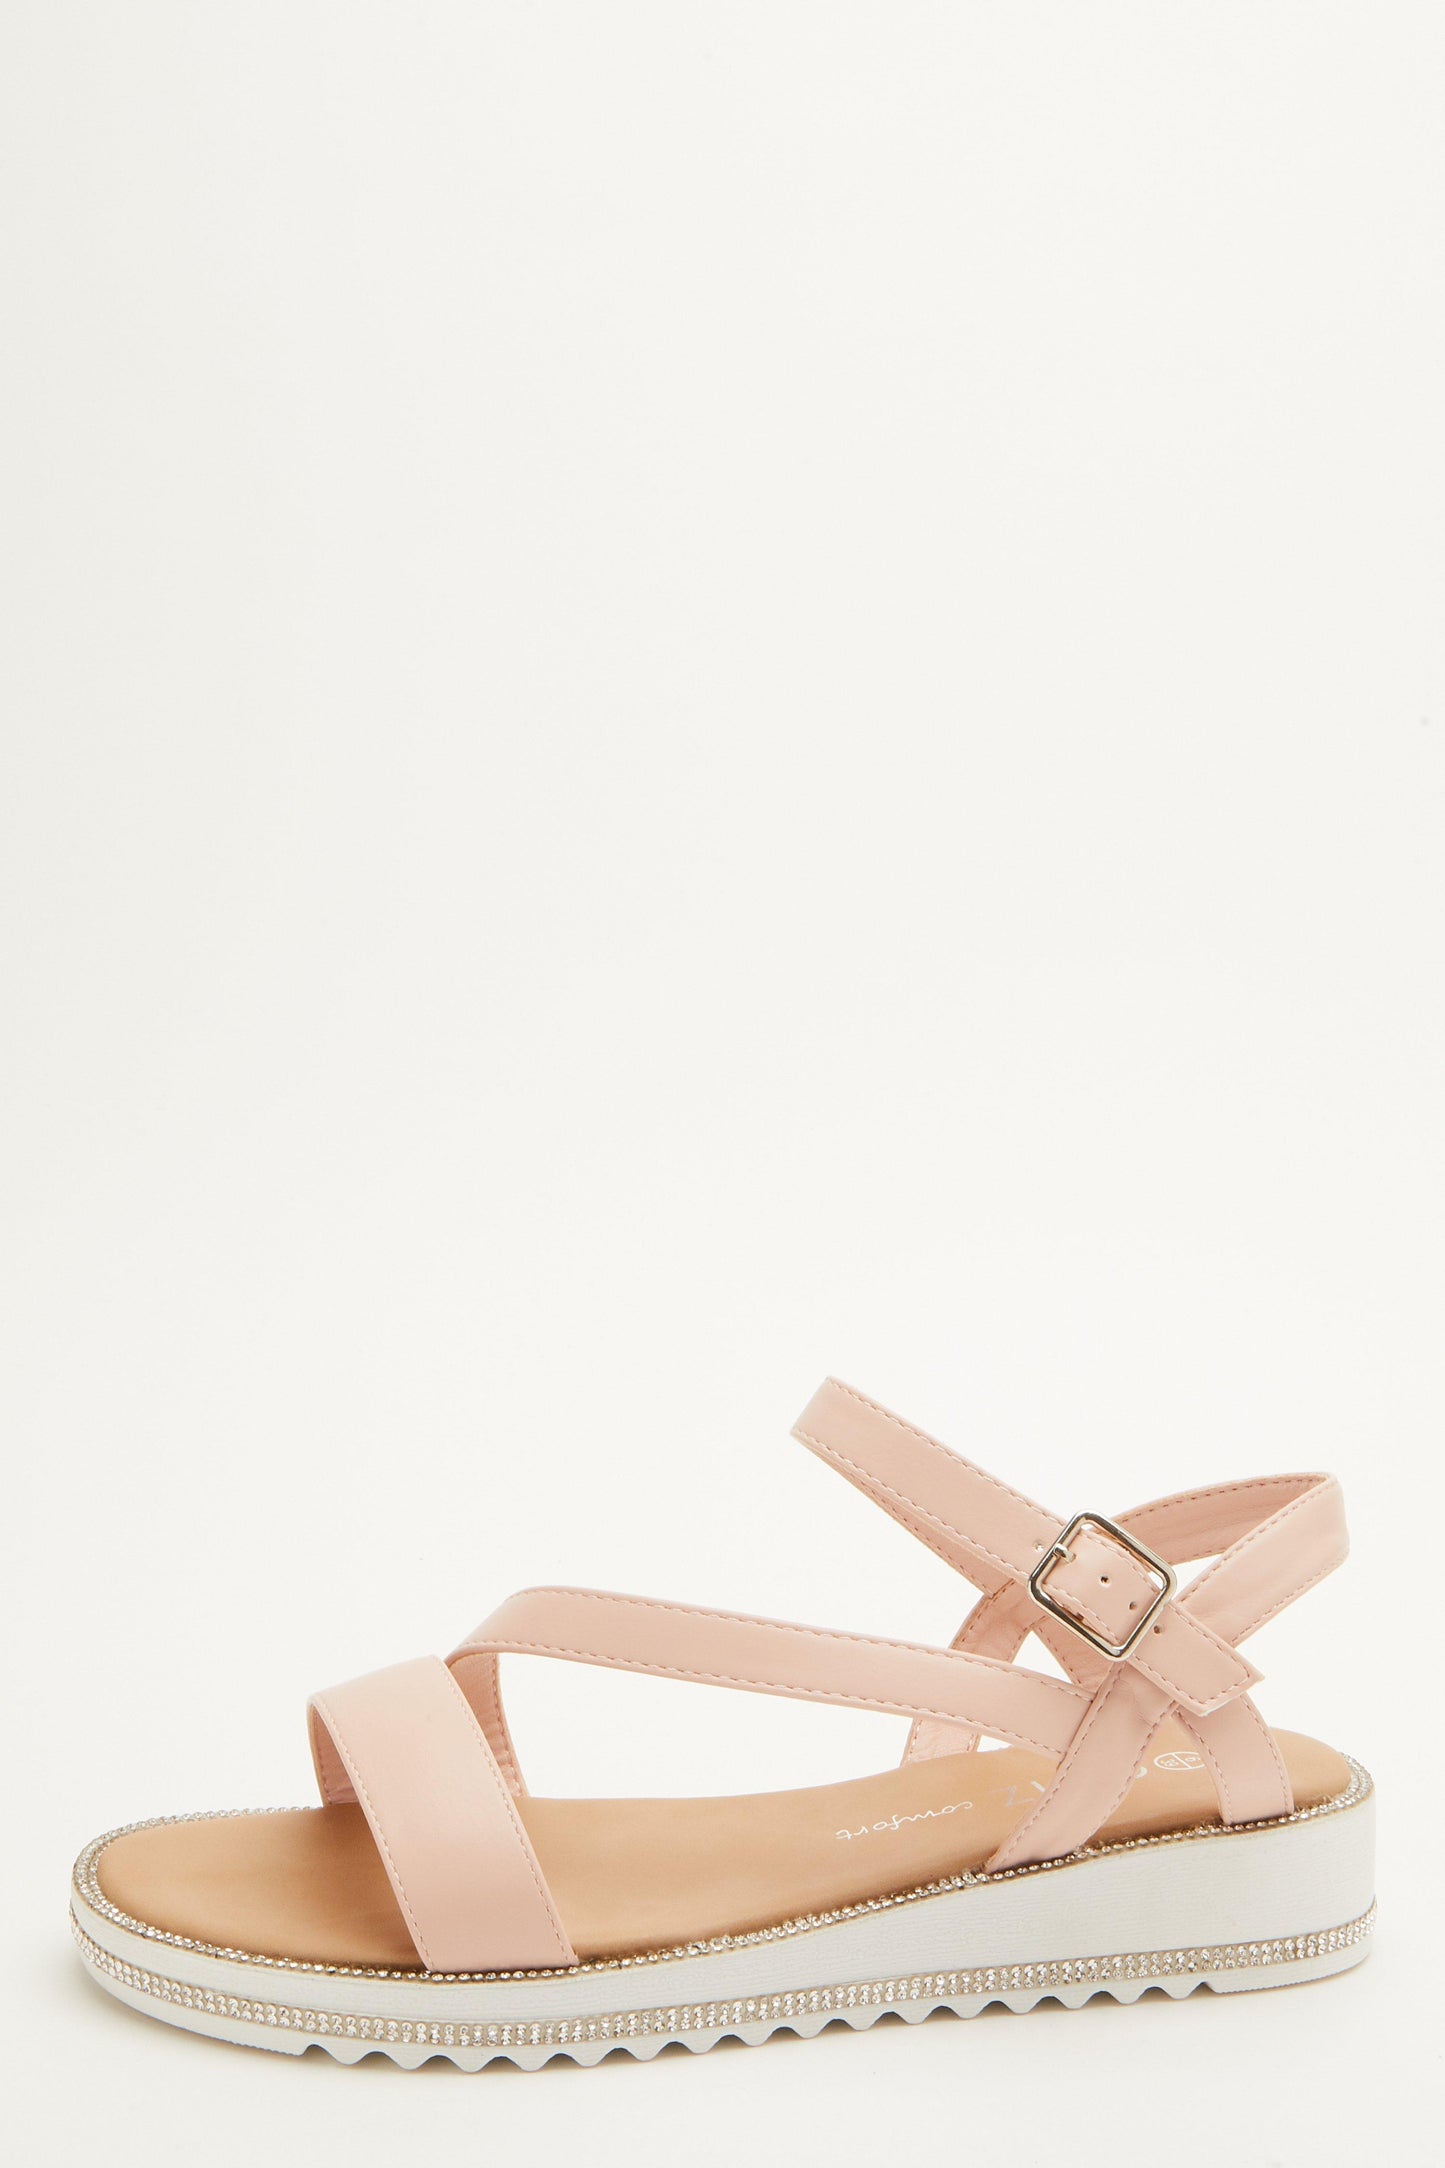 Pink Faux Leather Flatform Sandals